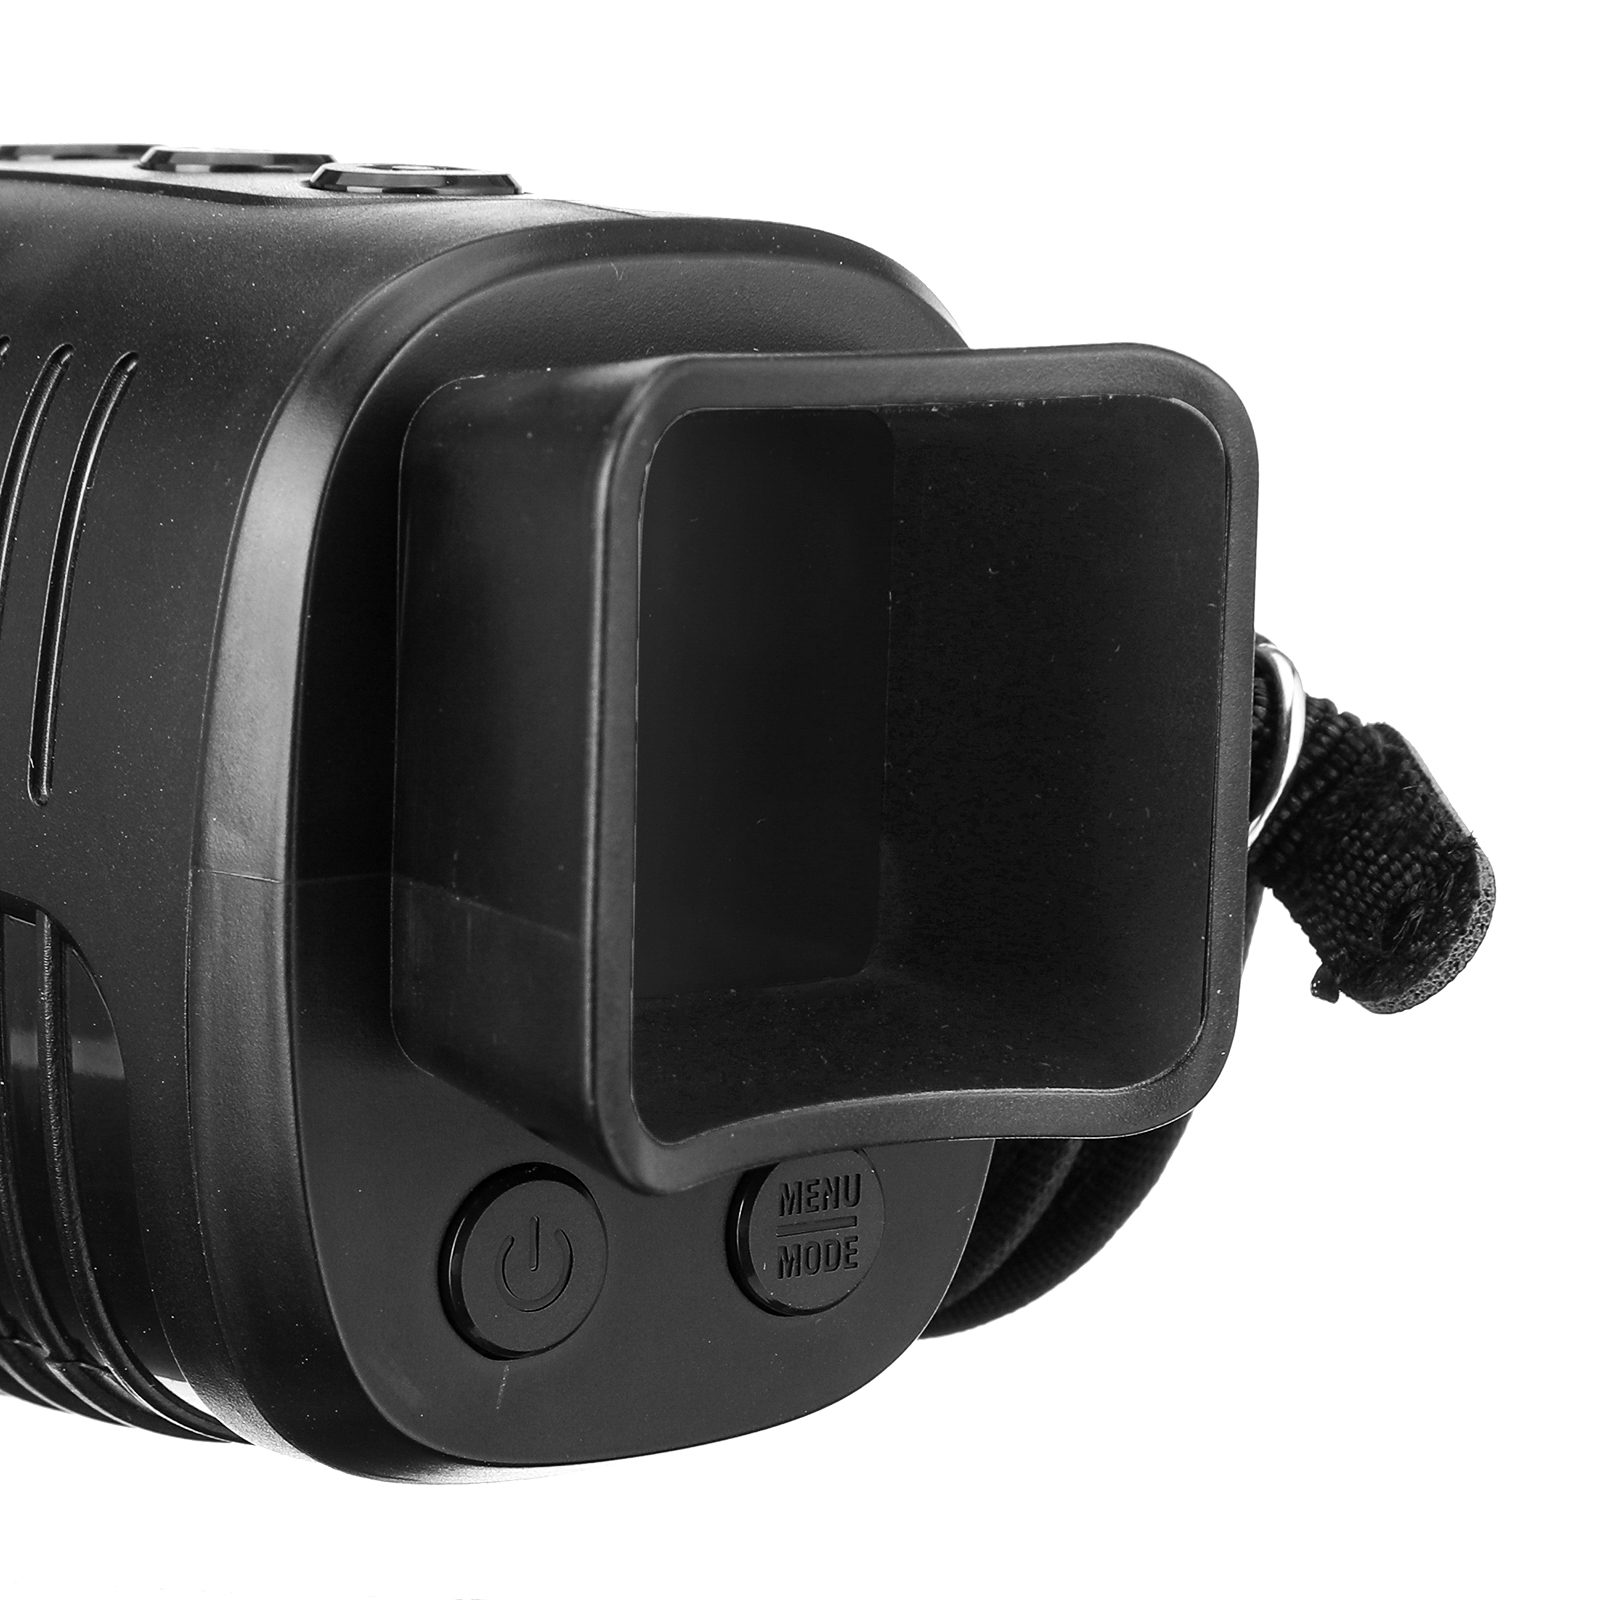 2K-HD-5X-Digital-Zoom-850mm-IR-Night-Vision-Video-Camcorder-15-inch-HD-LCD-Display-Vlogging-Camera-f-1958389-14